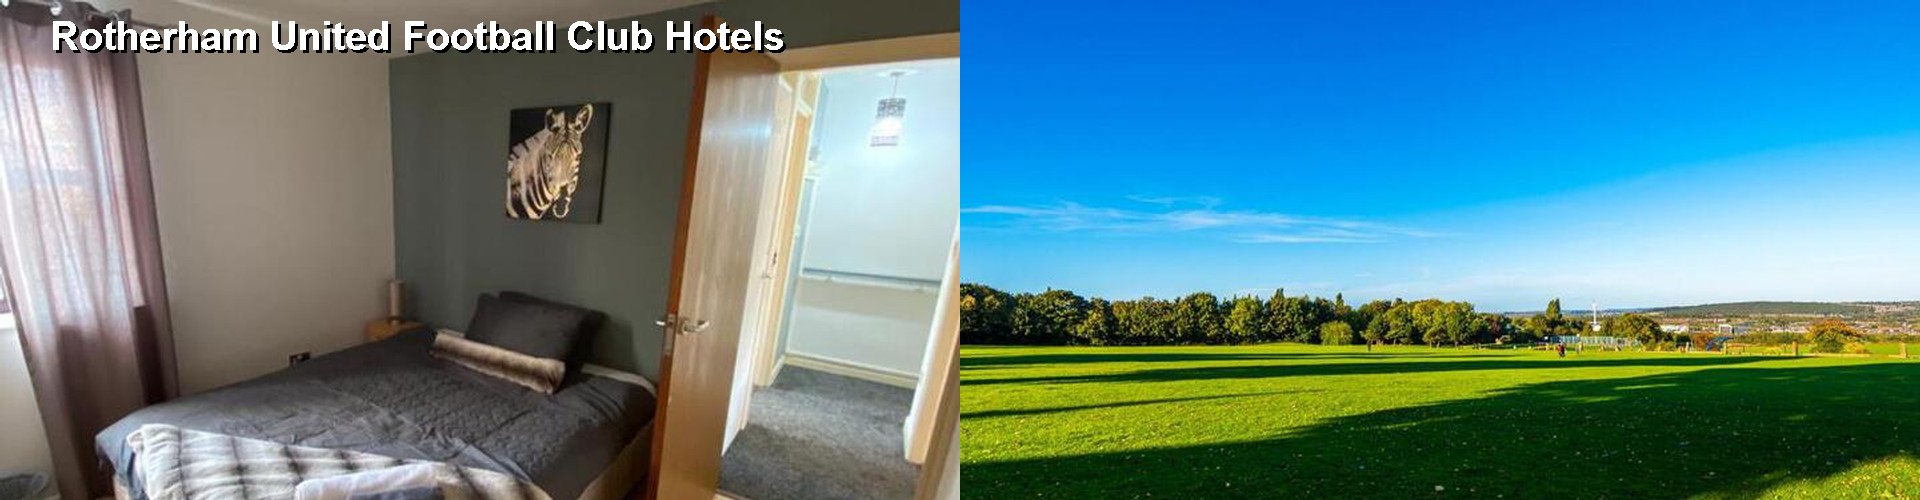 4 Best Hotels near Rotherham United Football Club